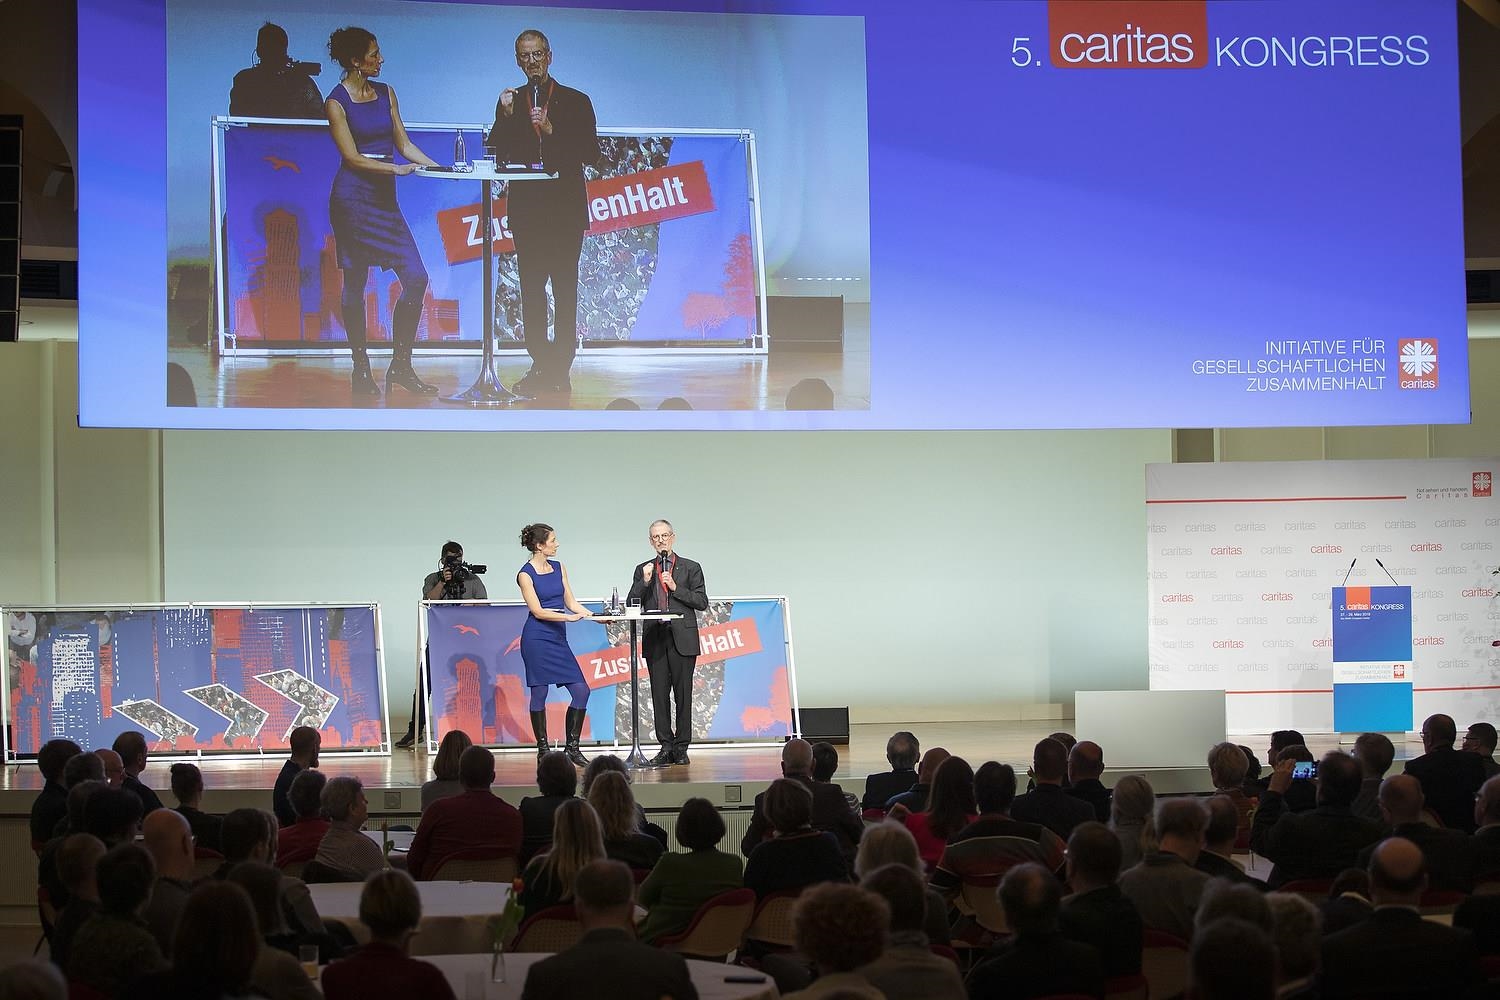 Caritas-Präsident Peter Neher auf der Bühne im Berliner Congress Center beim Caritaskongress 2019. (DCV/Janine Schmitz)